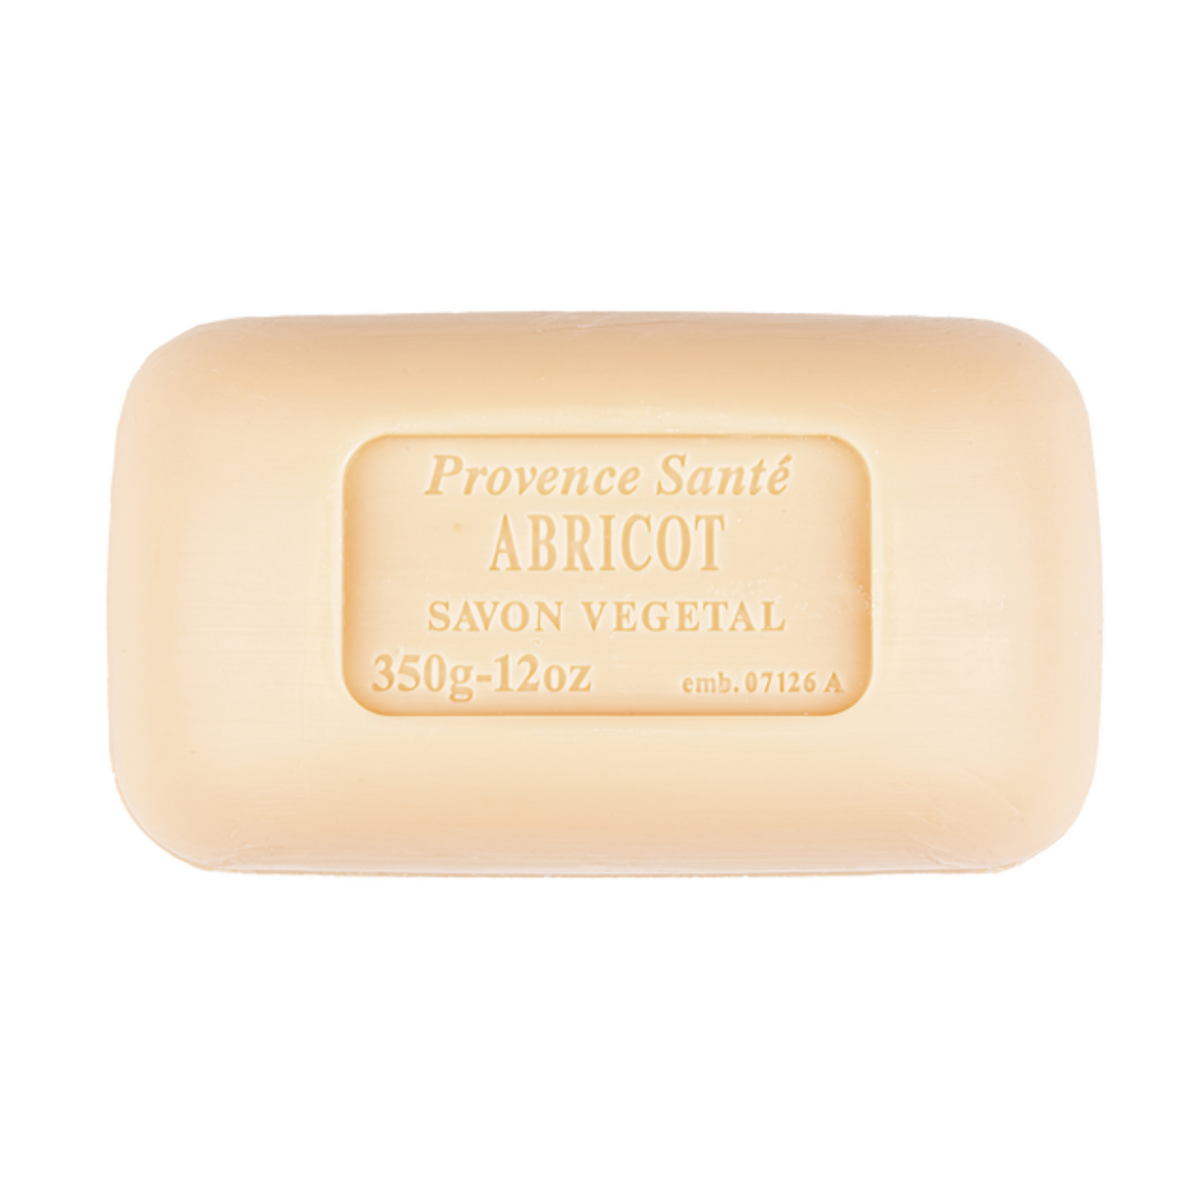 Primary Image of Provence Sante Apricot Big Bar Soap (12 oz)